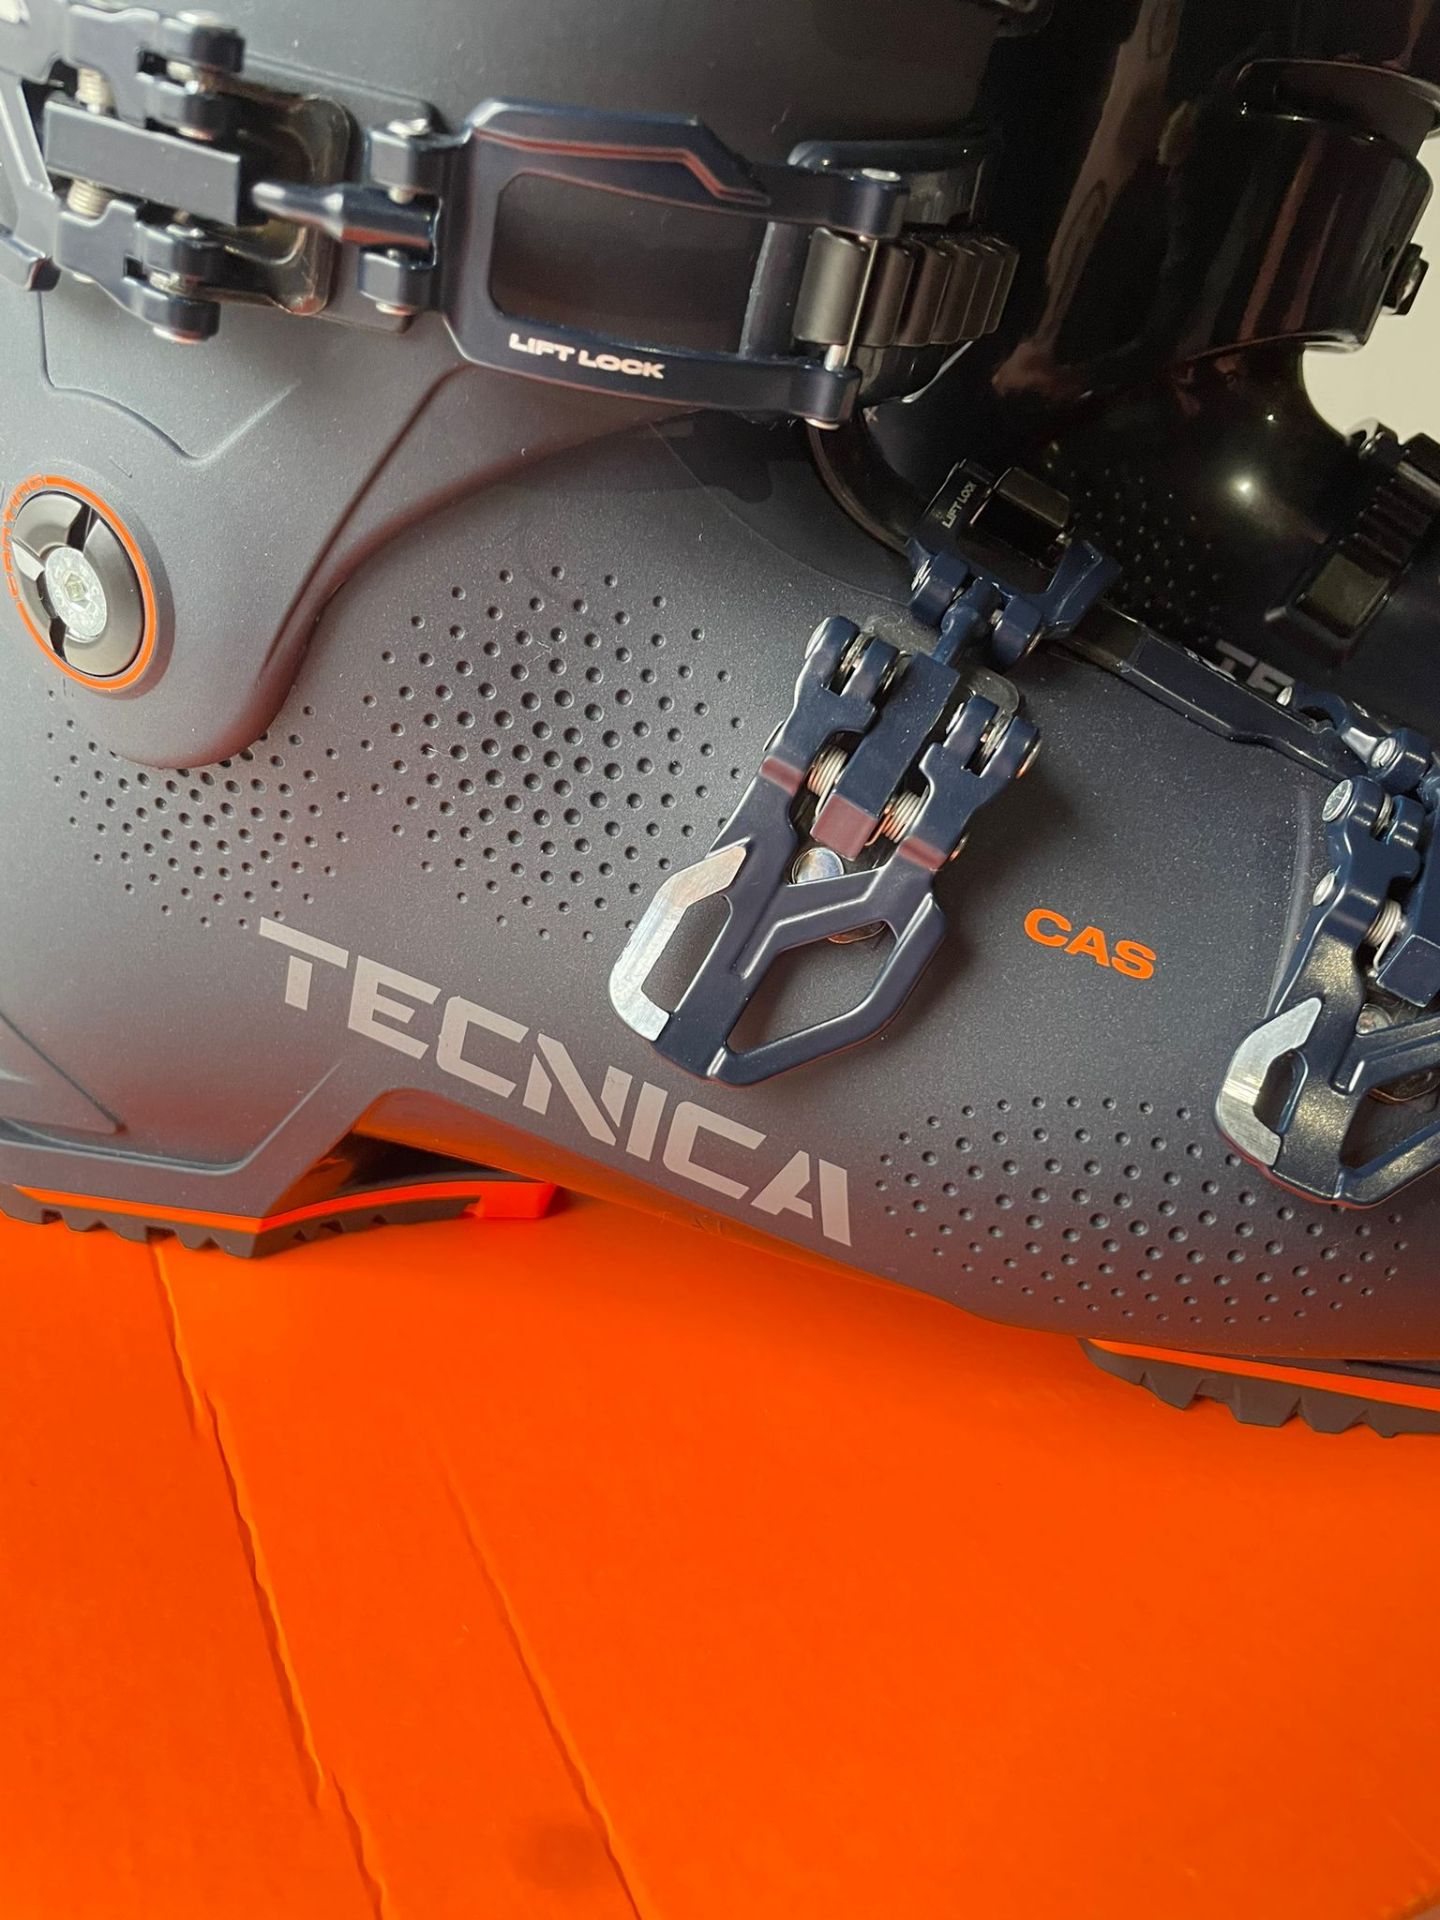 Tecnica ski boot, UK size 9.5 - Image 3 of 4